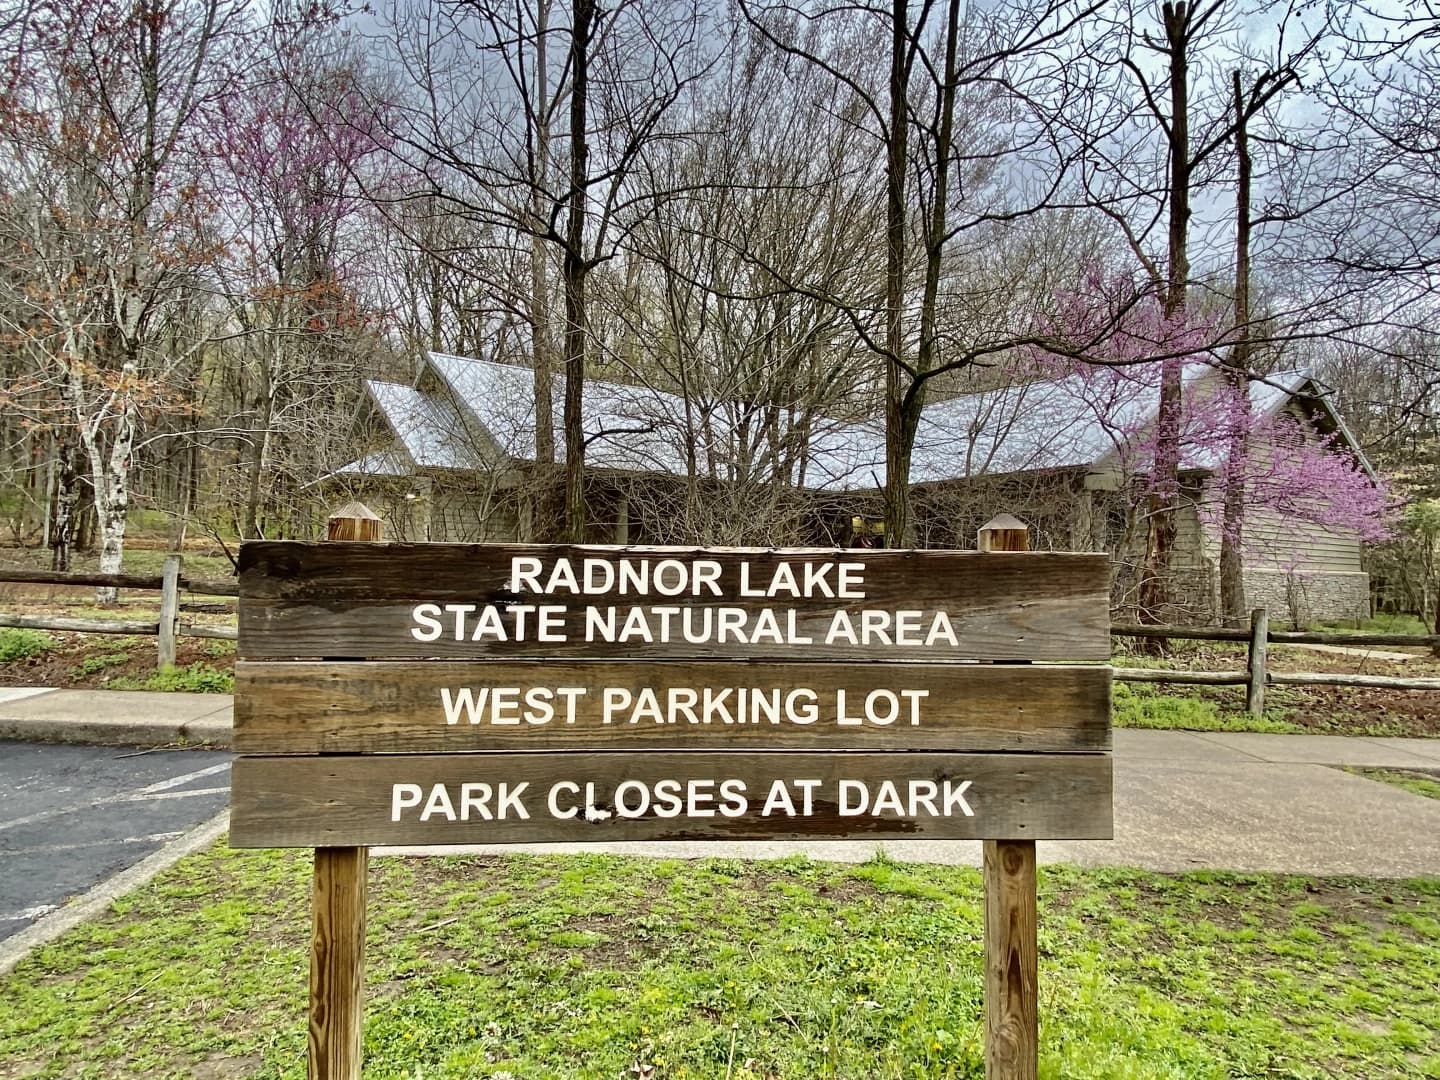 Radnor Lake State Park